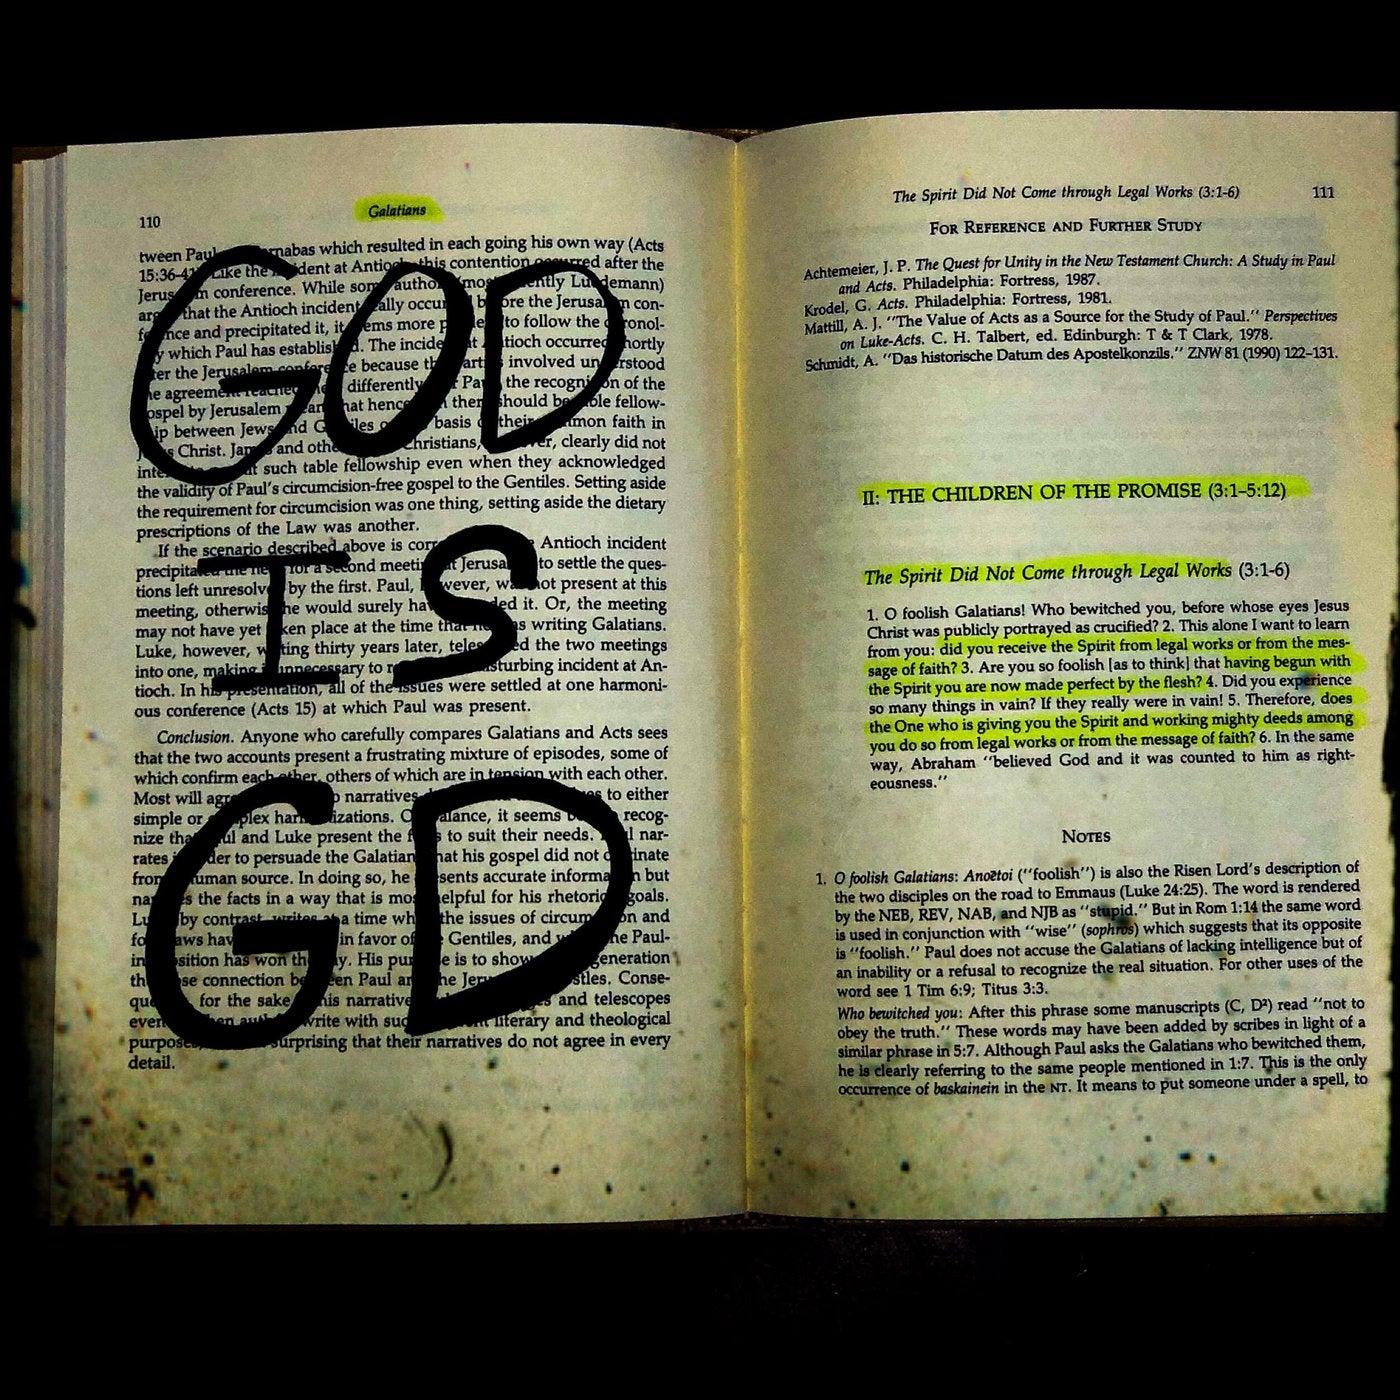 GOD IS GD